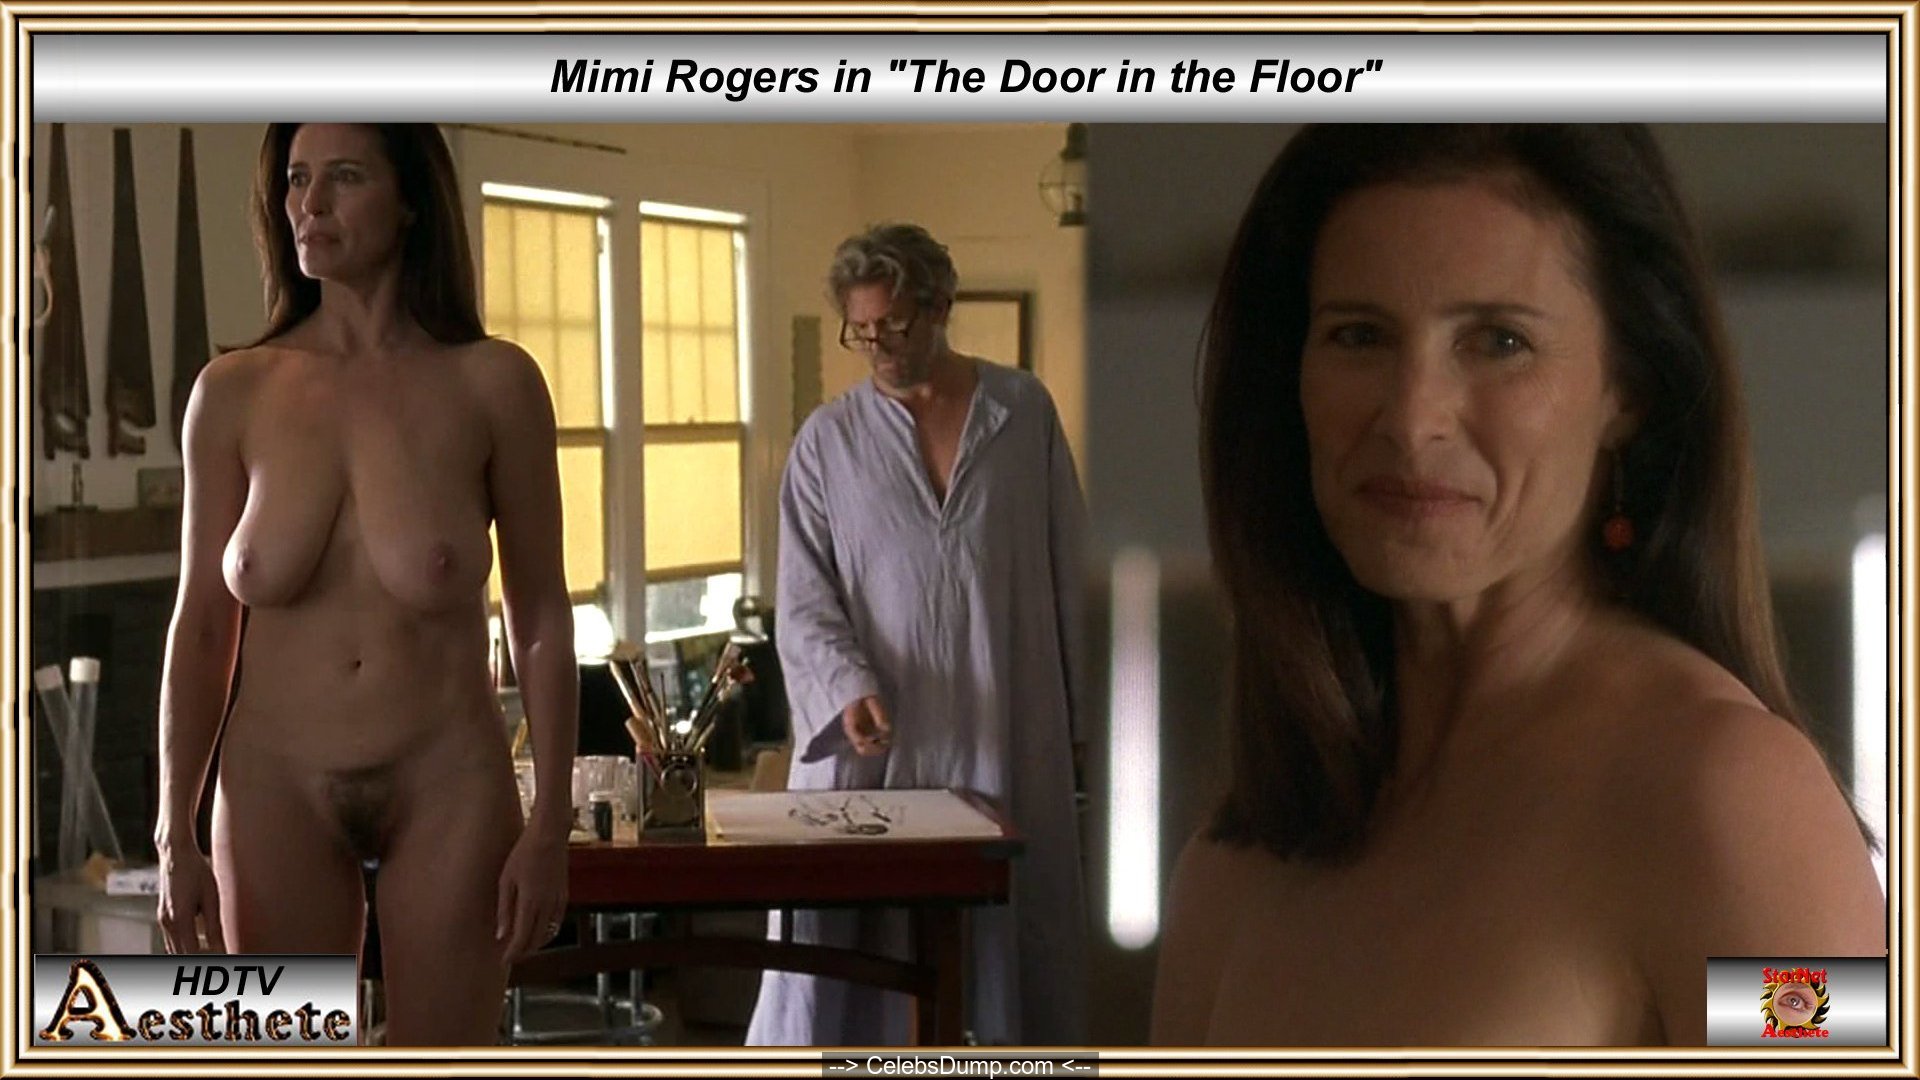 Mimi rodgers naked - ðŸ§¡ Busty Mimi Rogers naked movie scenes Celebs Dump.